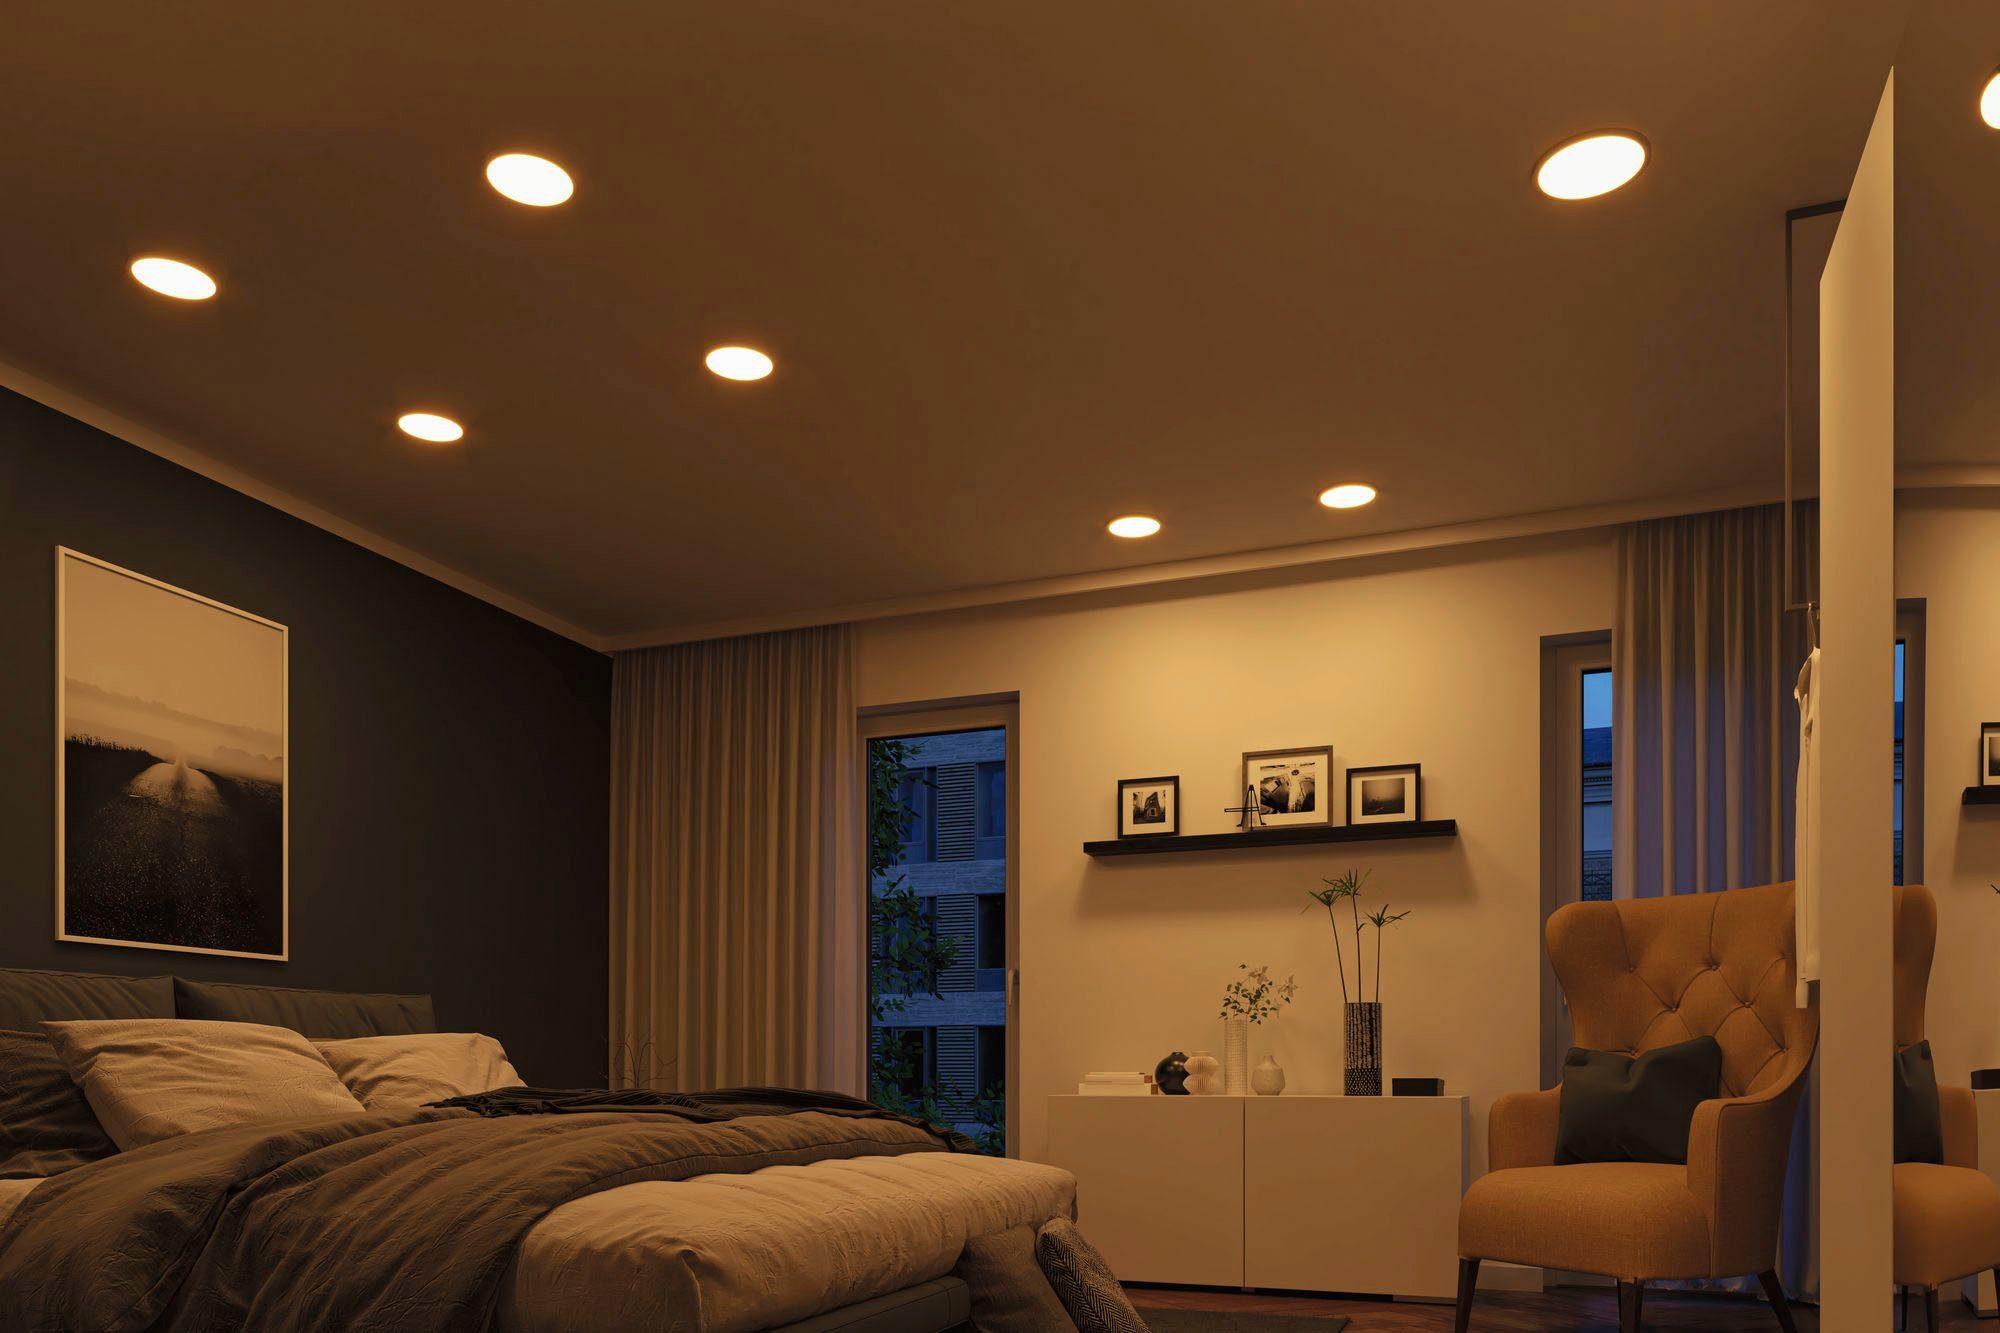 White Einbauleuchte fest LED-Modul, Home, kaltweiß, LED Weiß Areo, - Smart LED Tunable Paulmann integriert, warmweiß